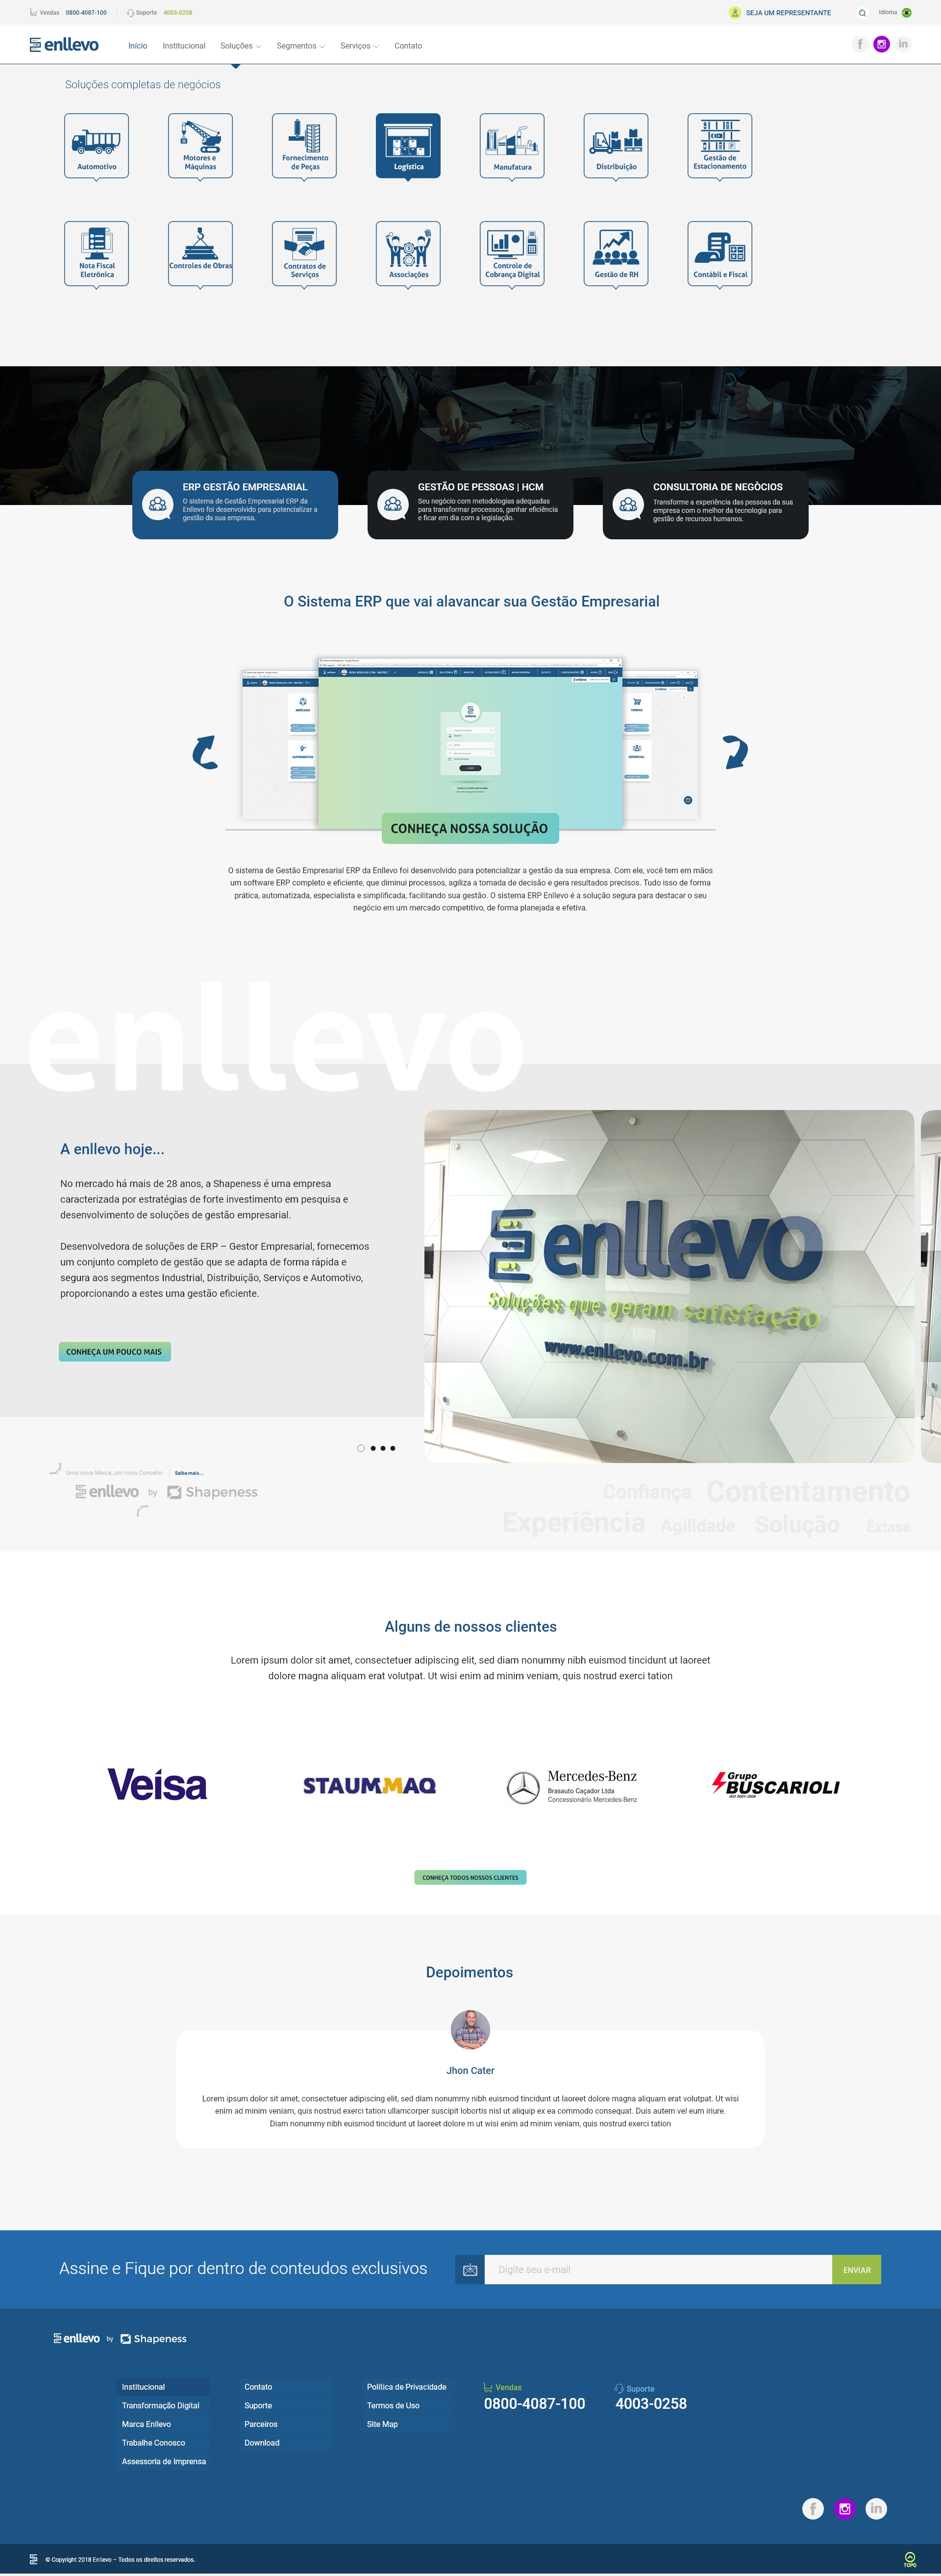 enllevo-website-http://www.enllevo.com.br/